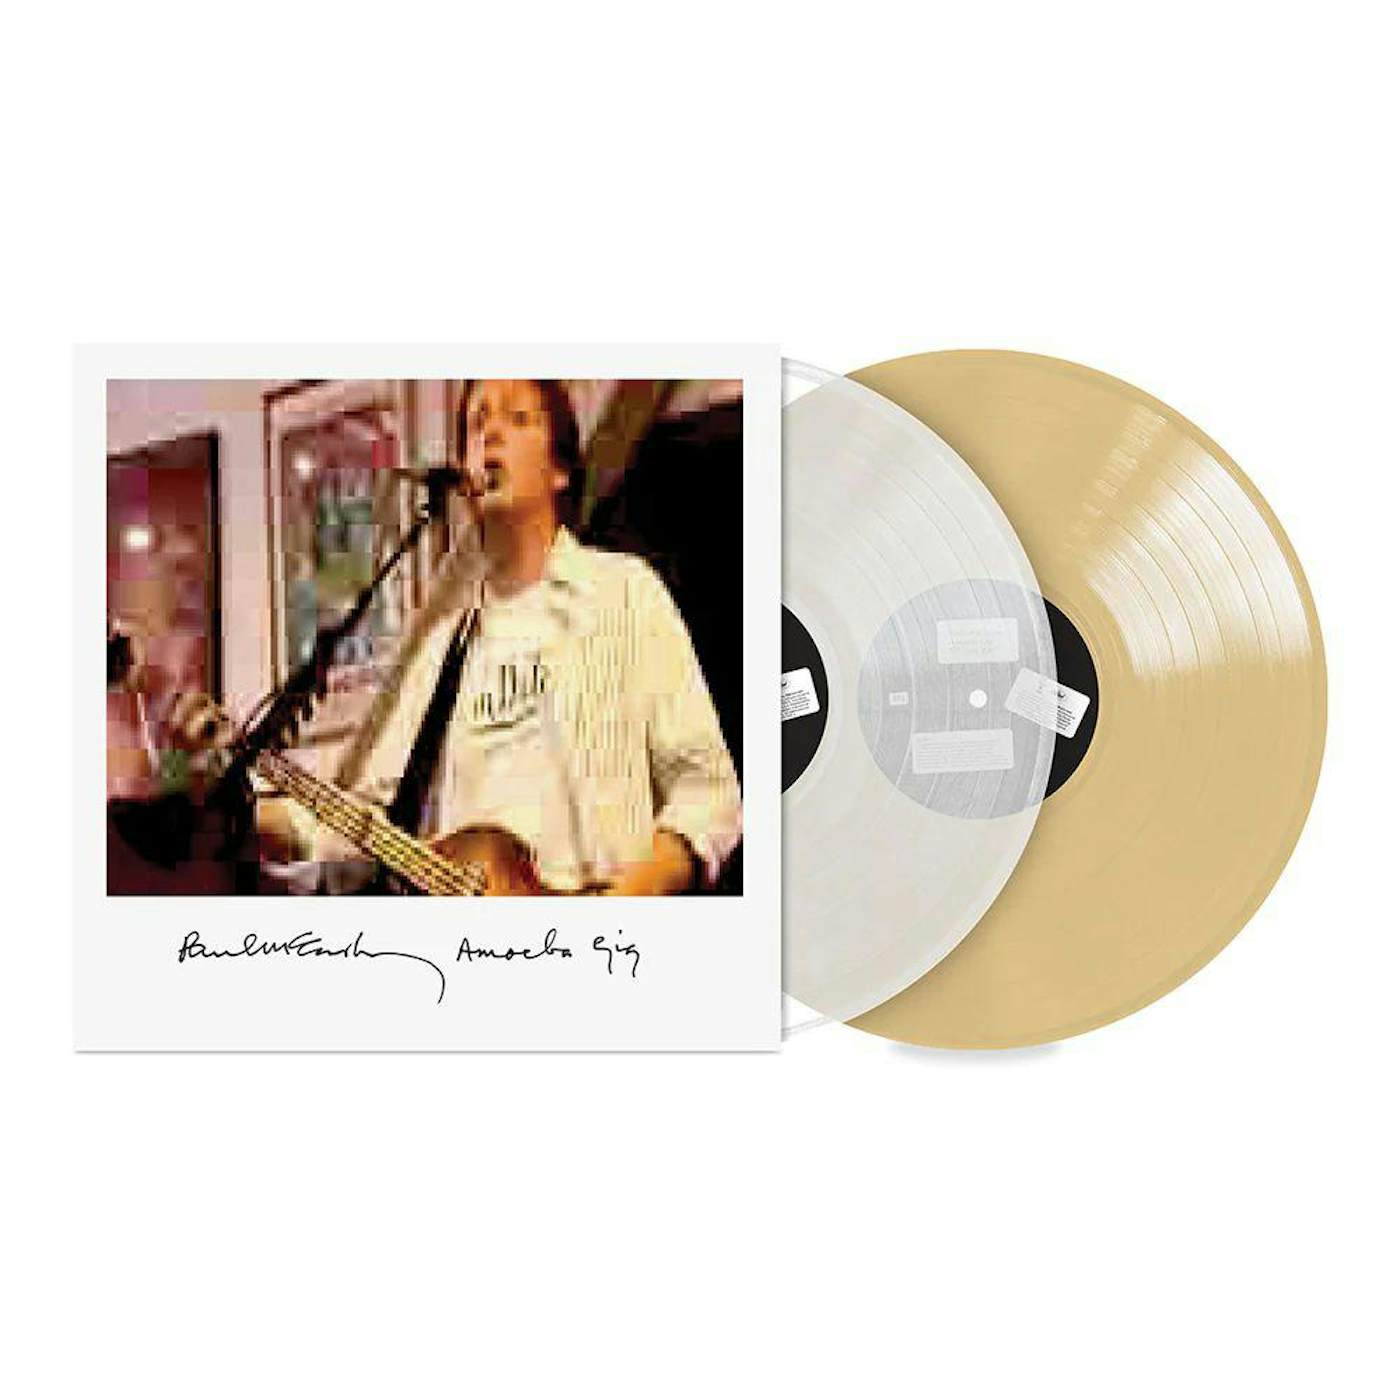 Paul McCartney Amoeba Gig Vinyl Record